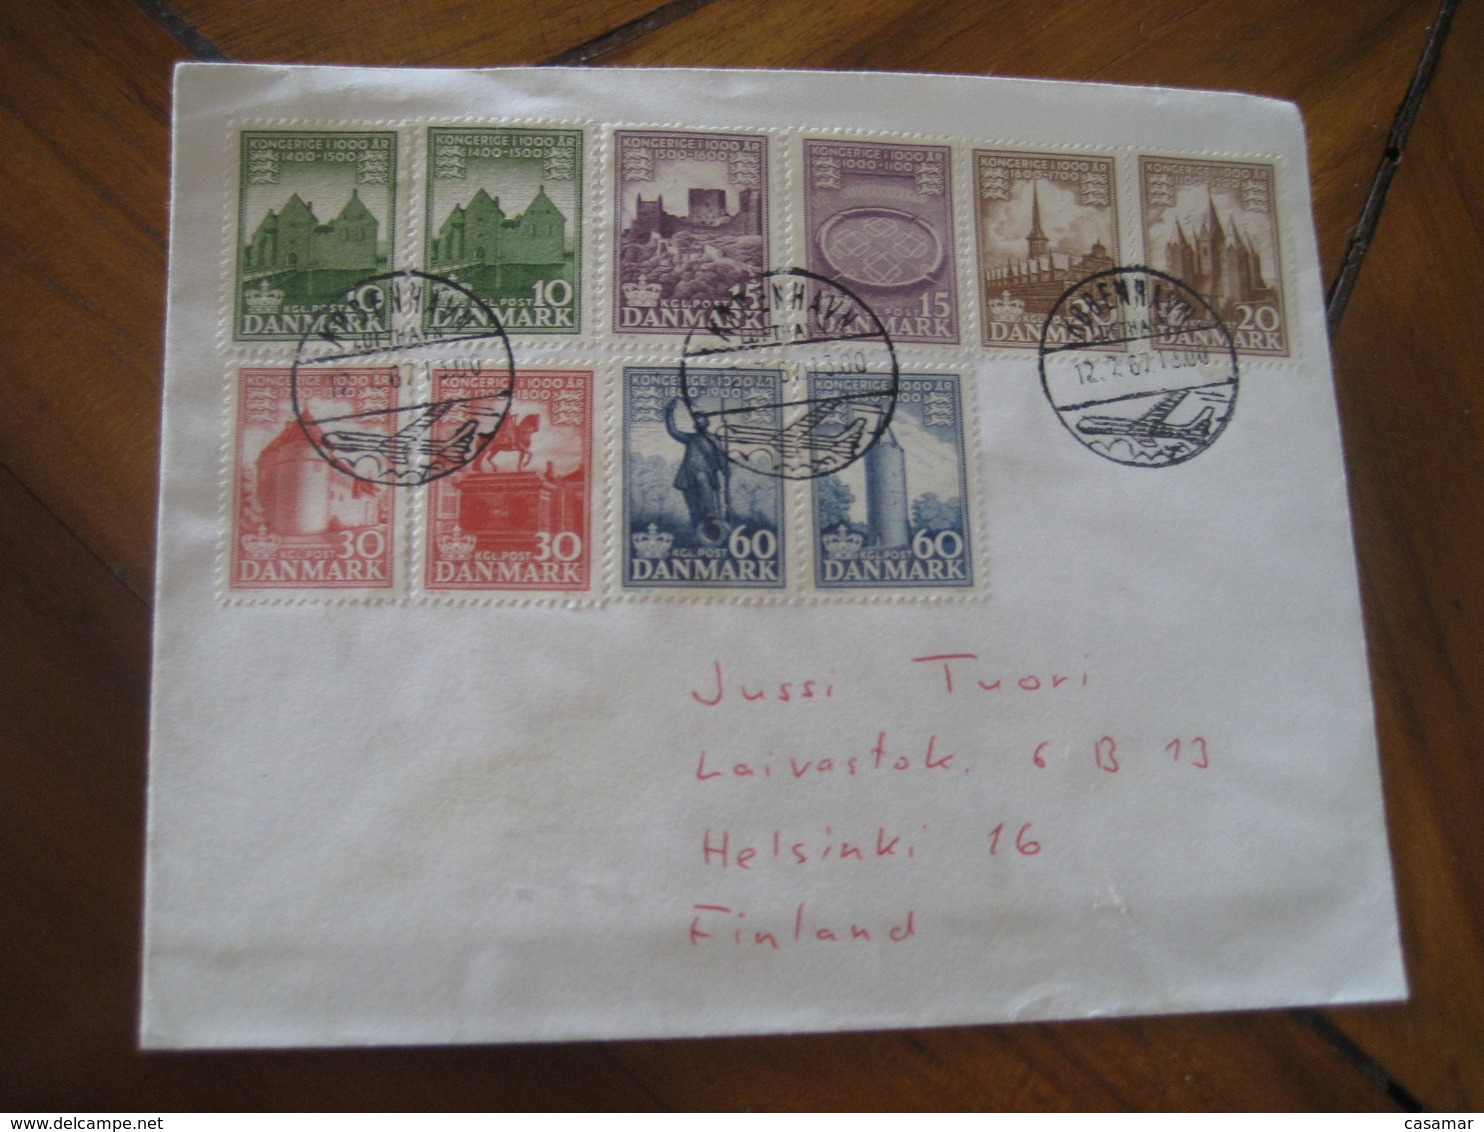 KOBENHAVN 1967 To Helsinki Finland Lufthavn Plane Flight 10 Stamp Cancel Cover DENMARK - Lettres & Documents